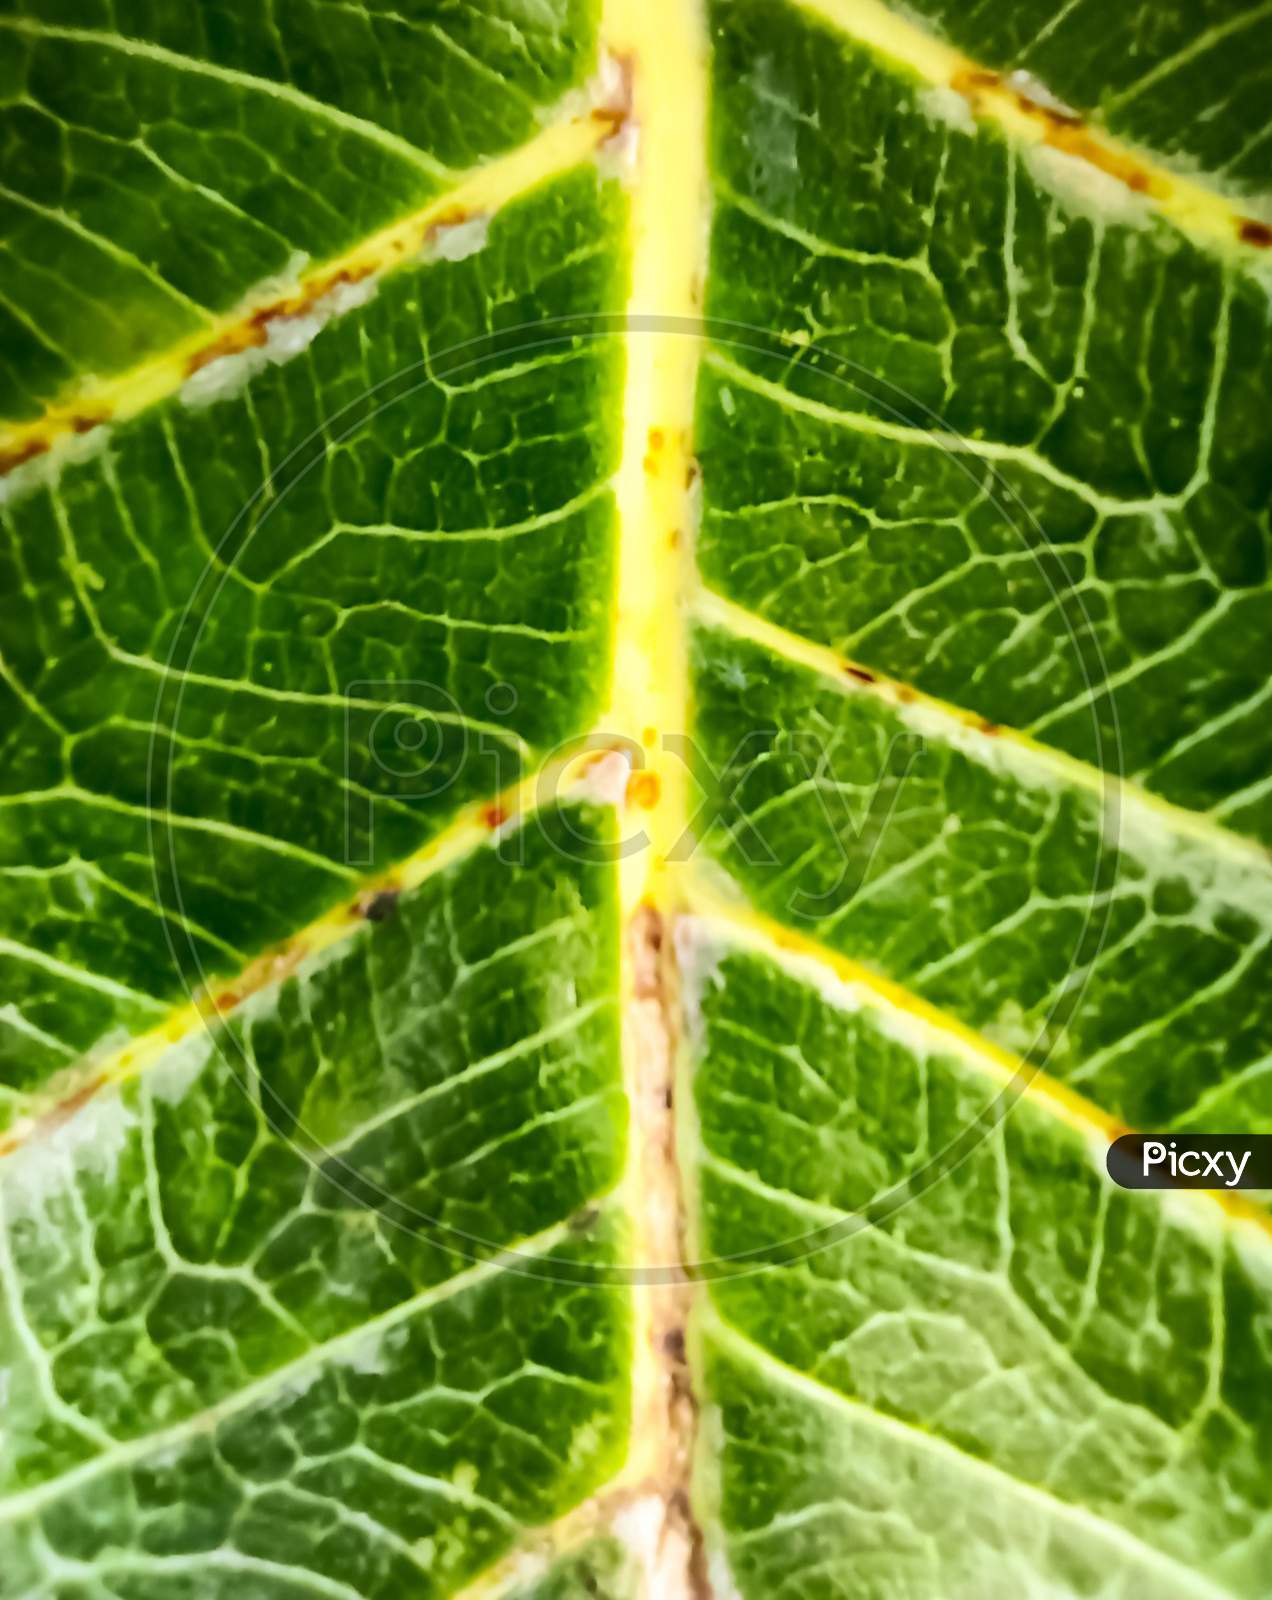 The green leaf veins